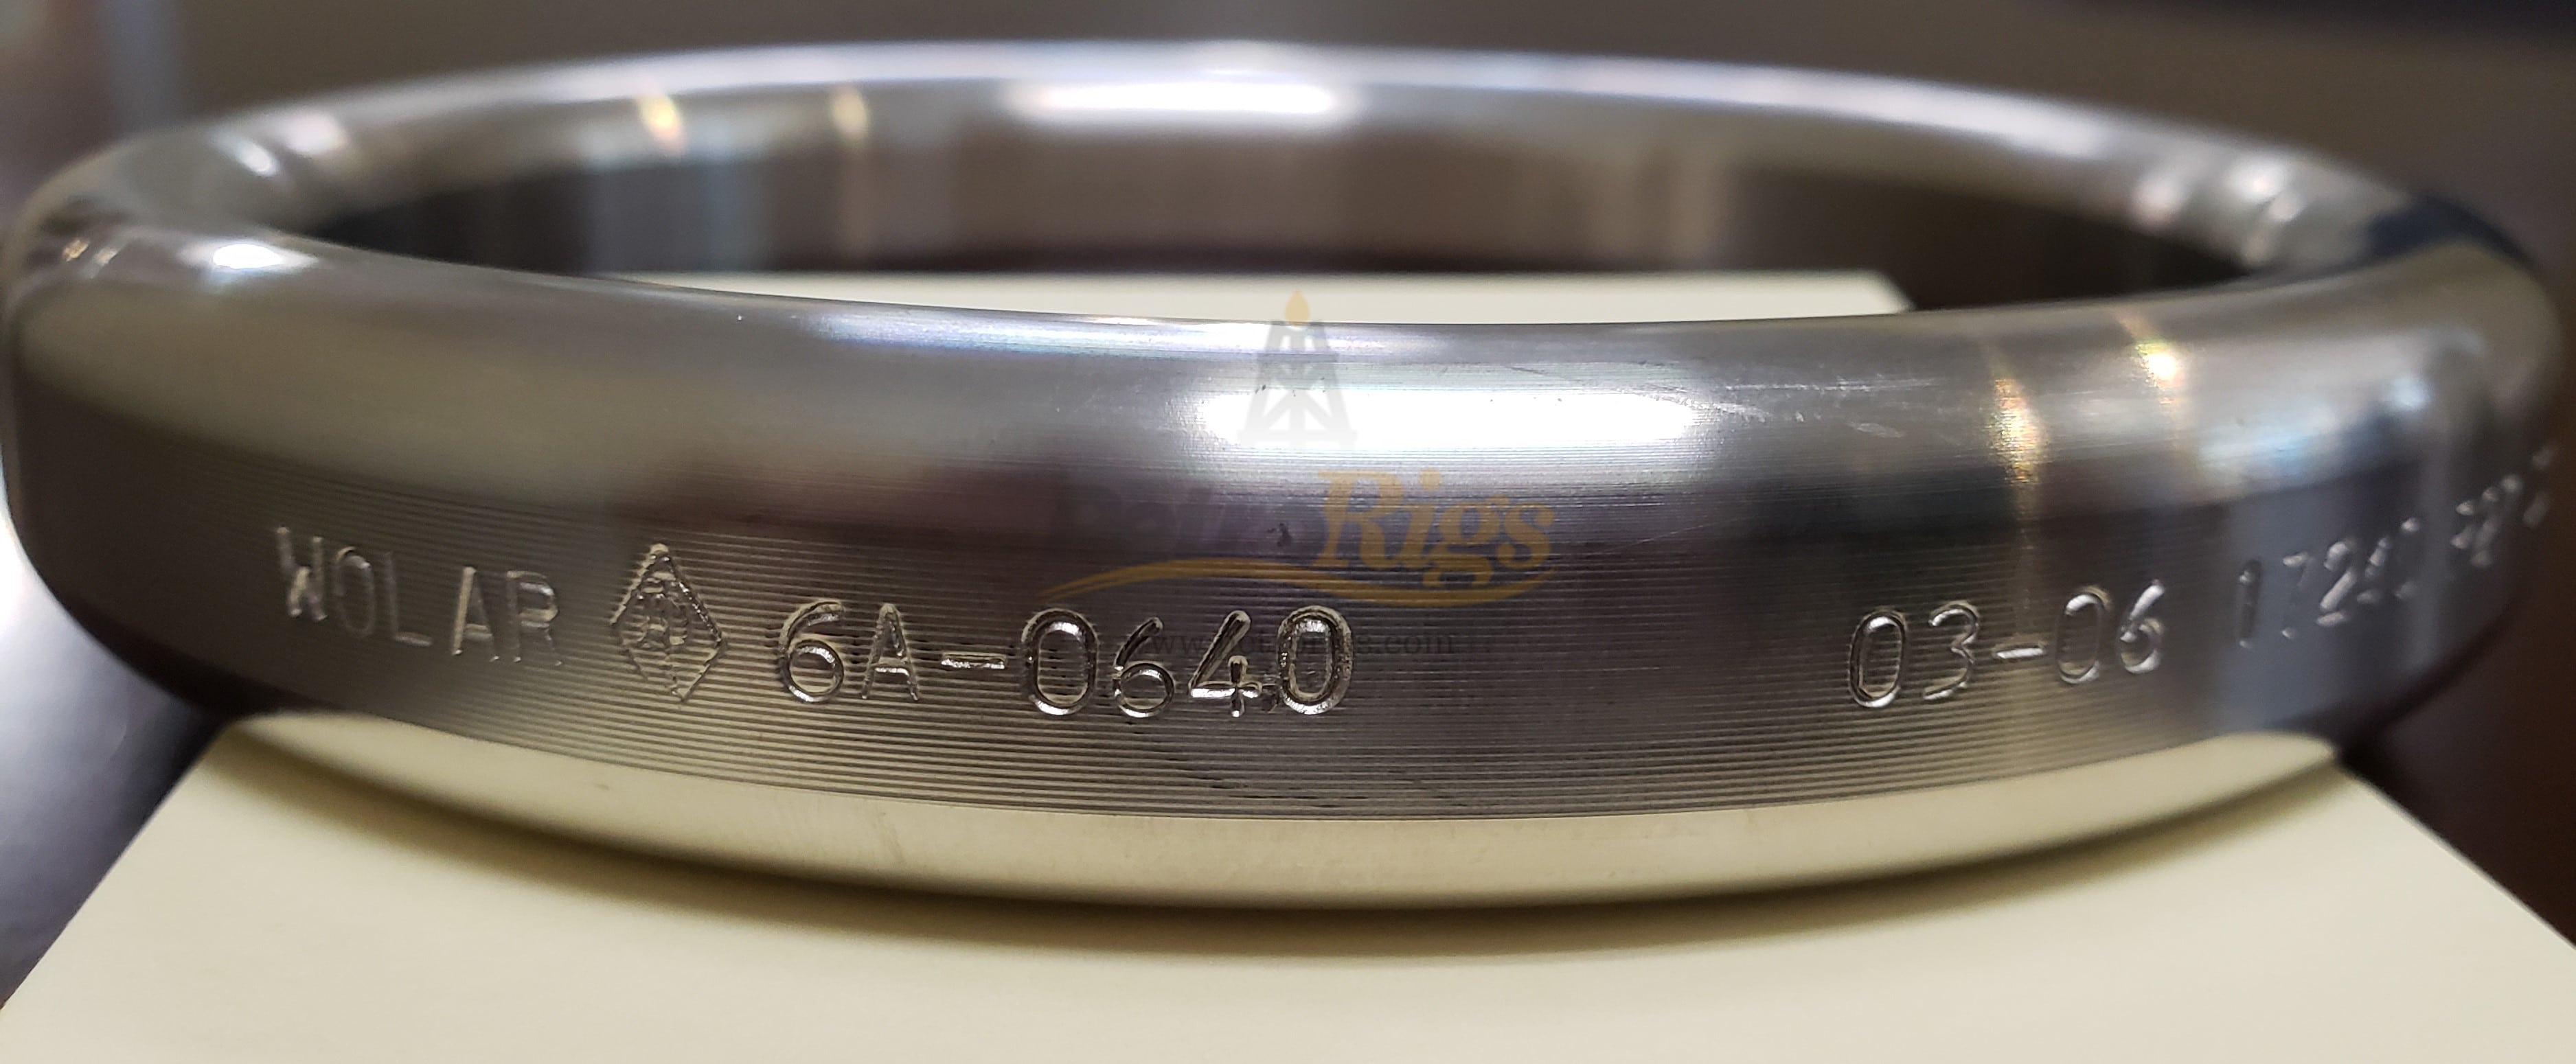 Vanco bx-155-s304 gasket ring 3-15 bx155-s304-4 | eBay